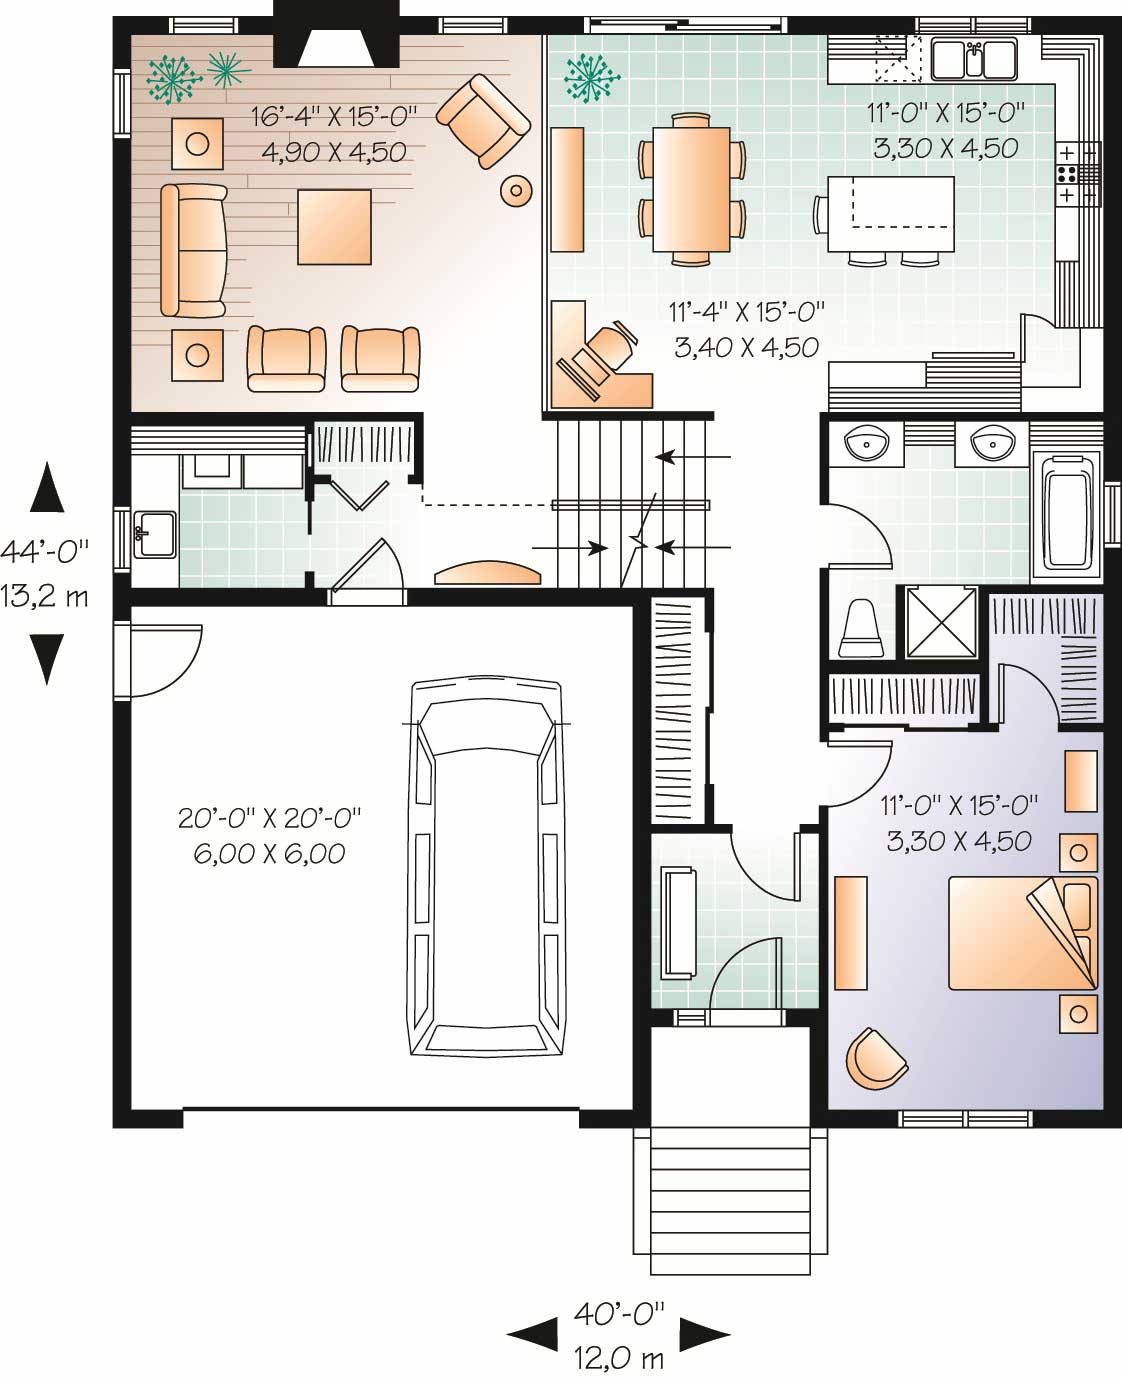 5 Bedroom Split Level House Plan with Garage 2729 Sq Ft